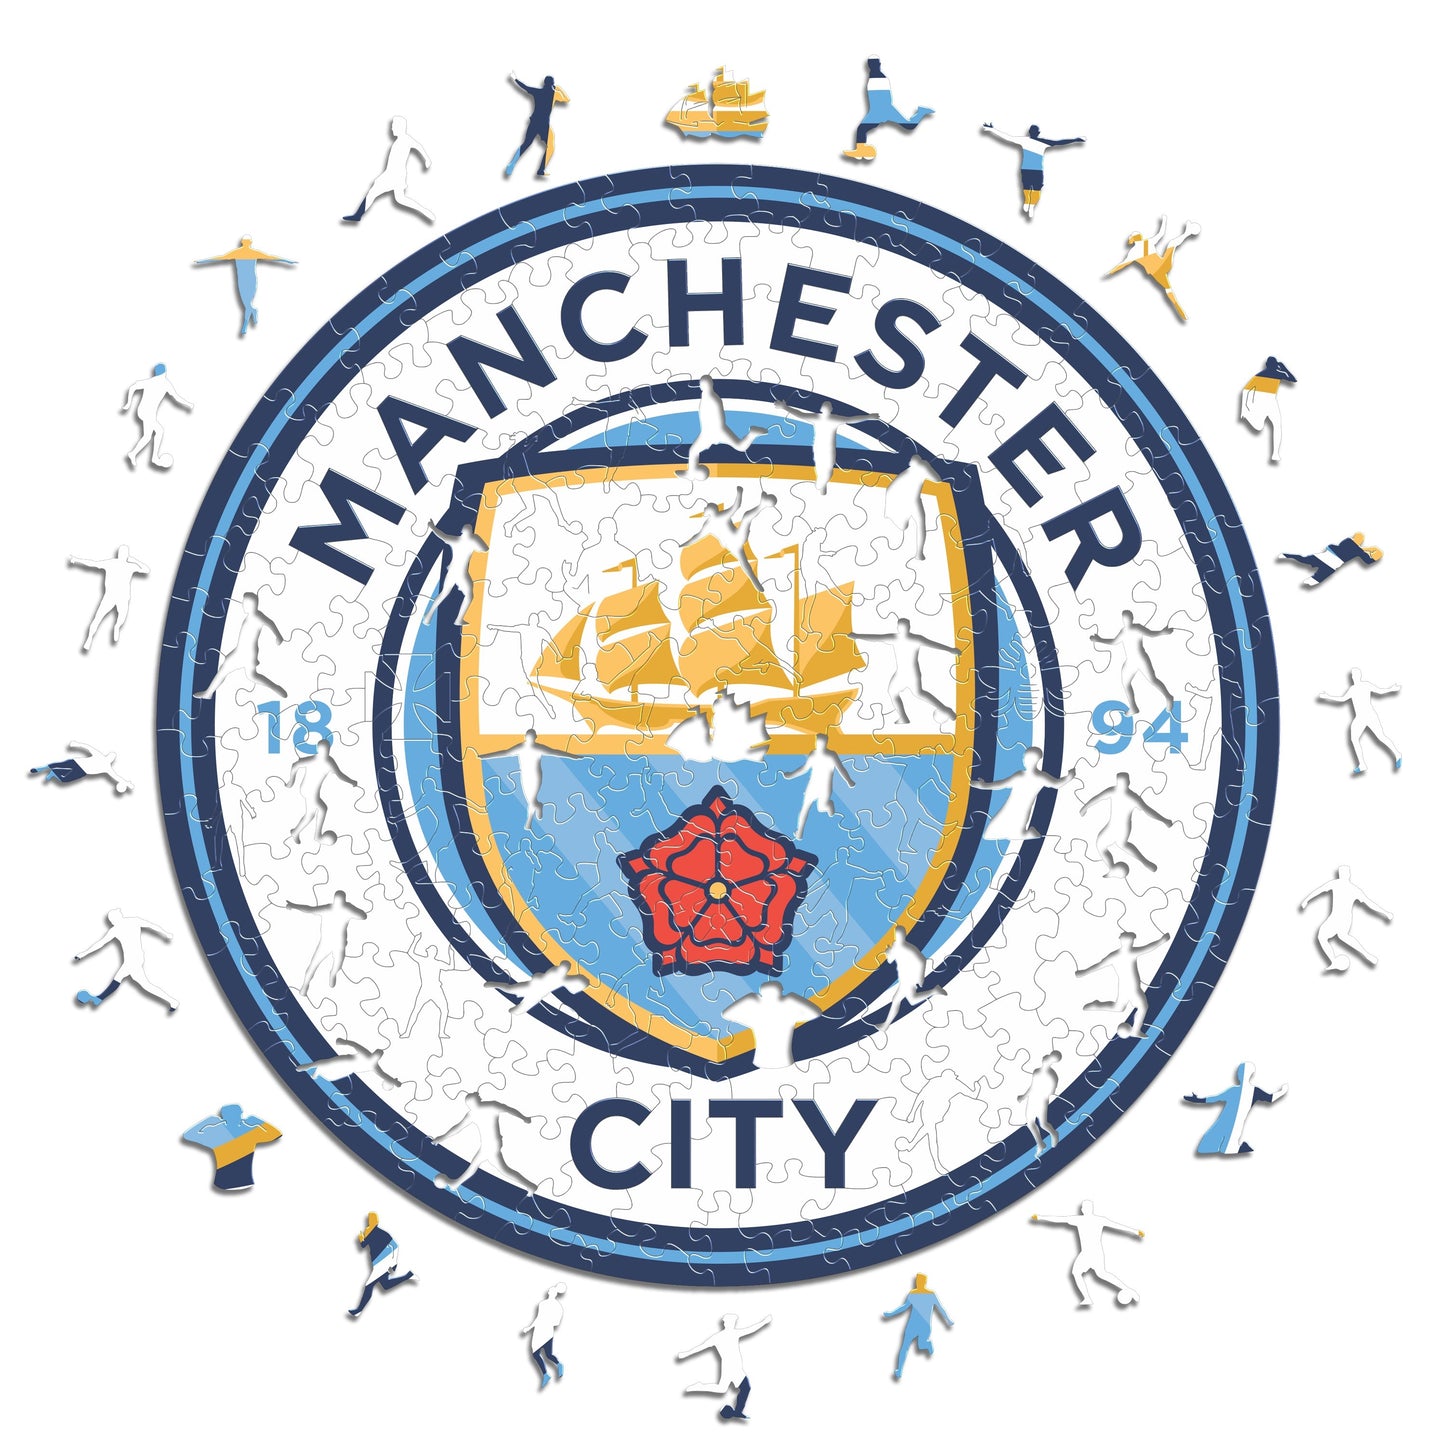 2 PACK Manchester City FC® Crest + Haaland